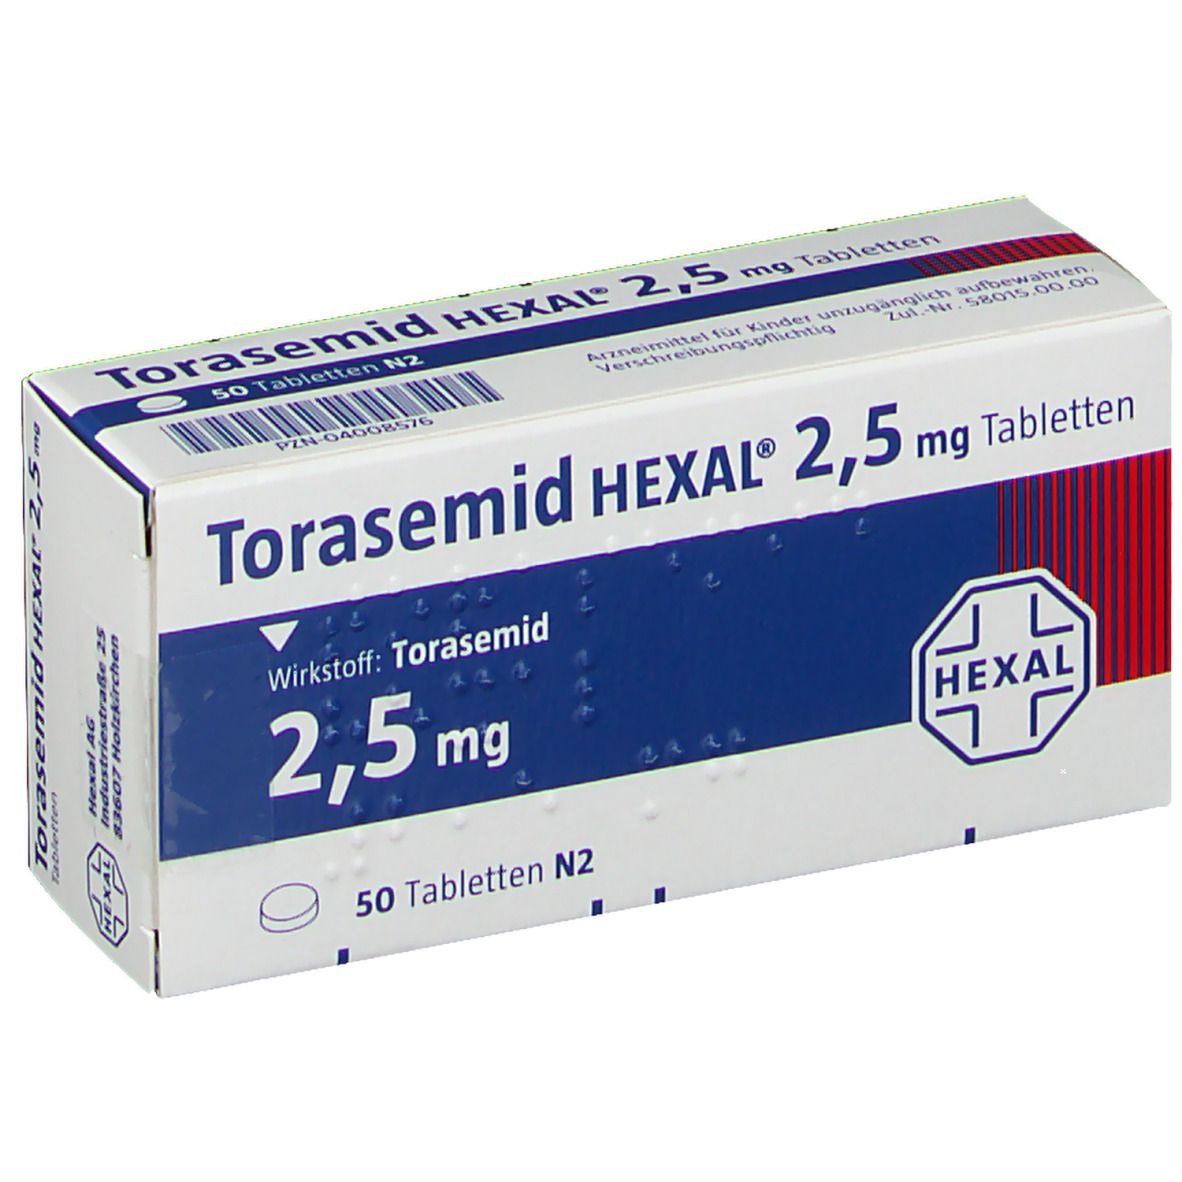 Torasemid HEXAL® 2,5 mg